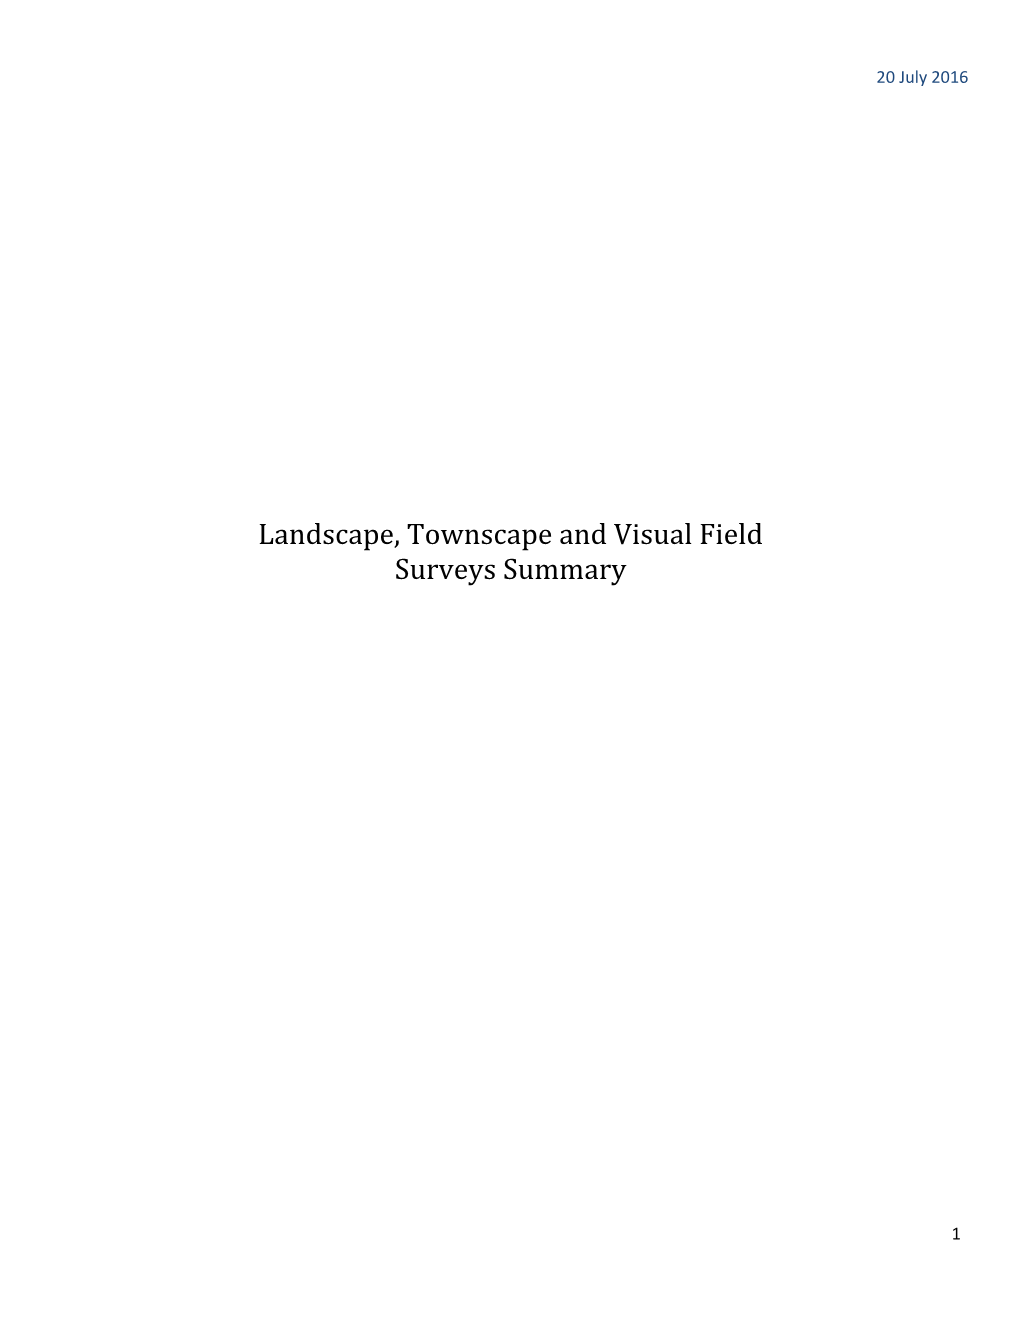 Landscape, Townscape and Visual Field Surveys Summary